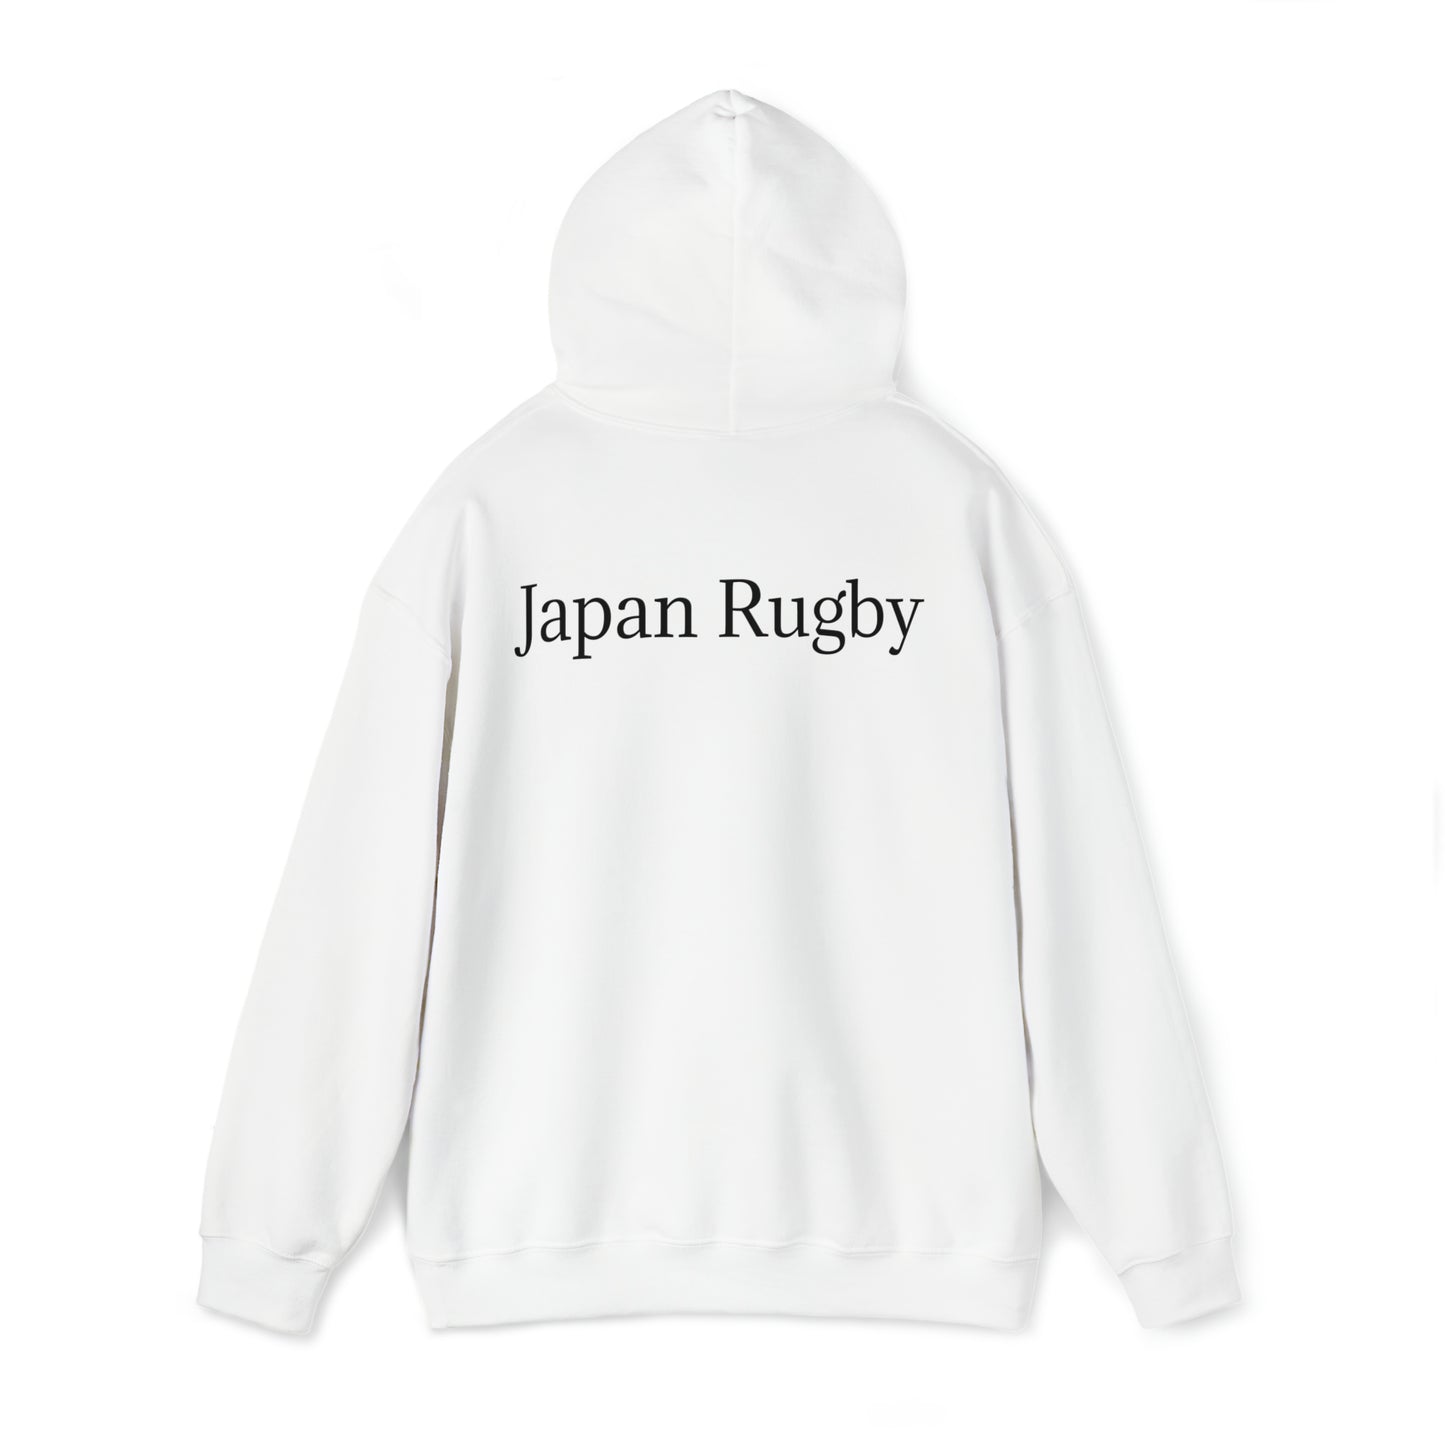 Japan RWC photoshoot - light hoodies